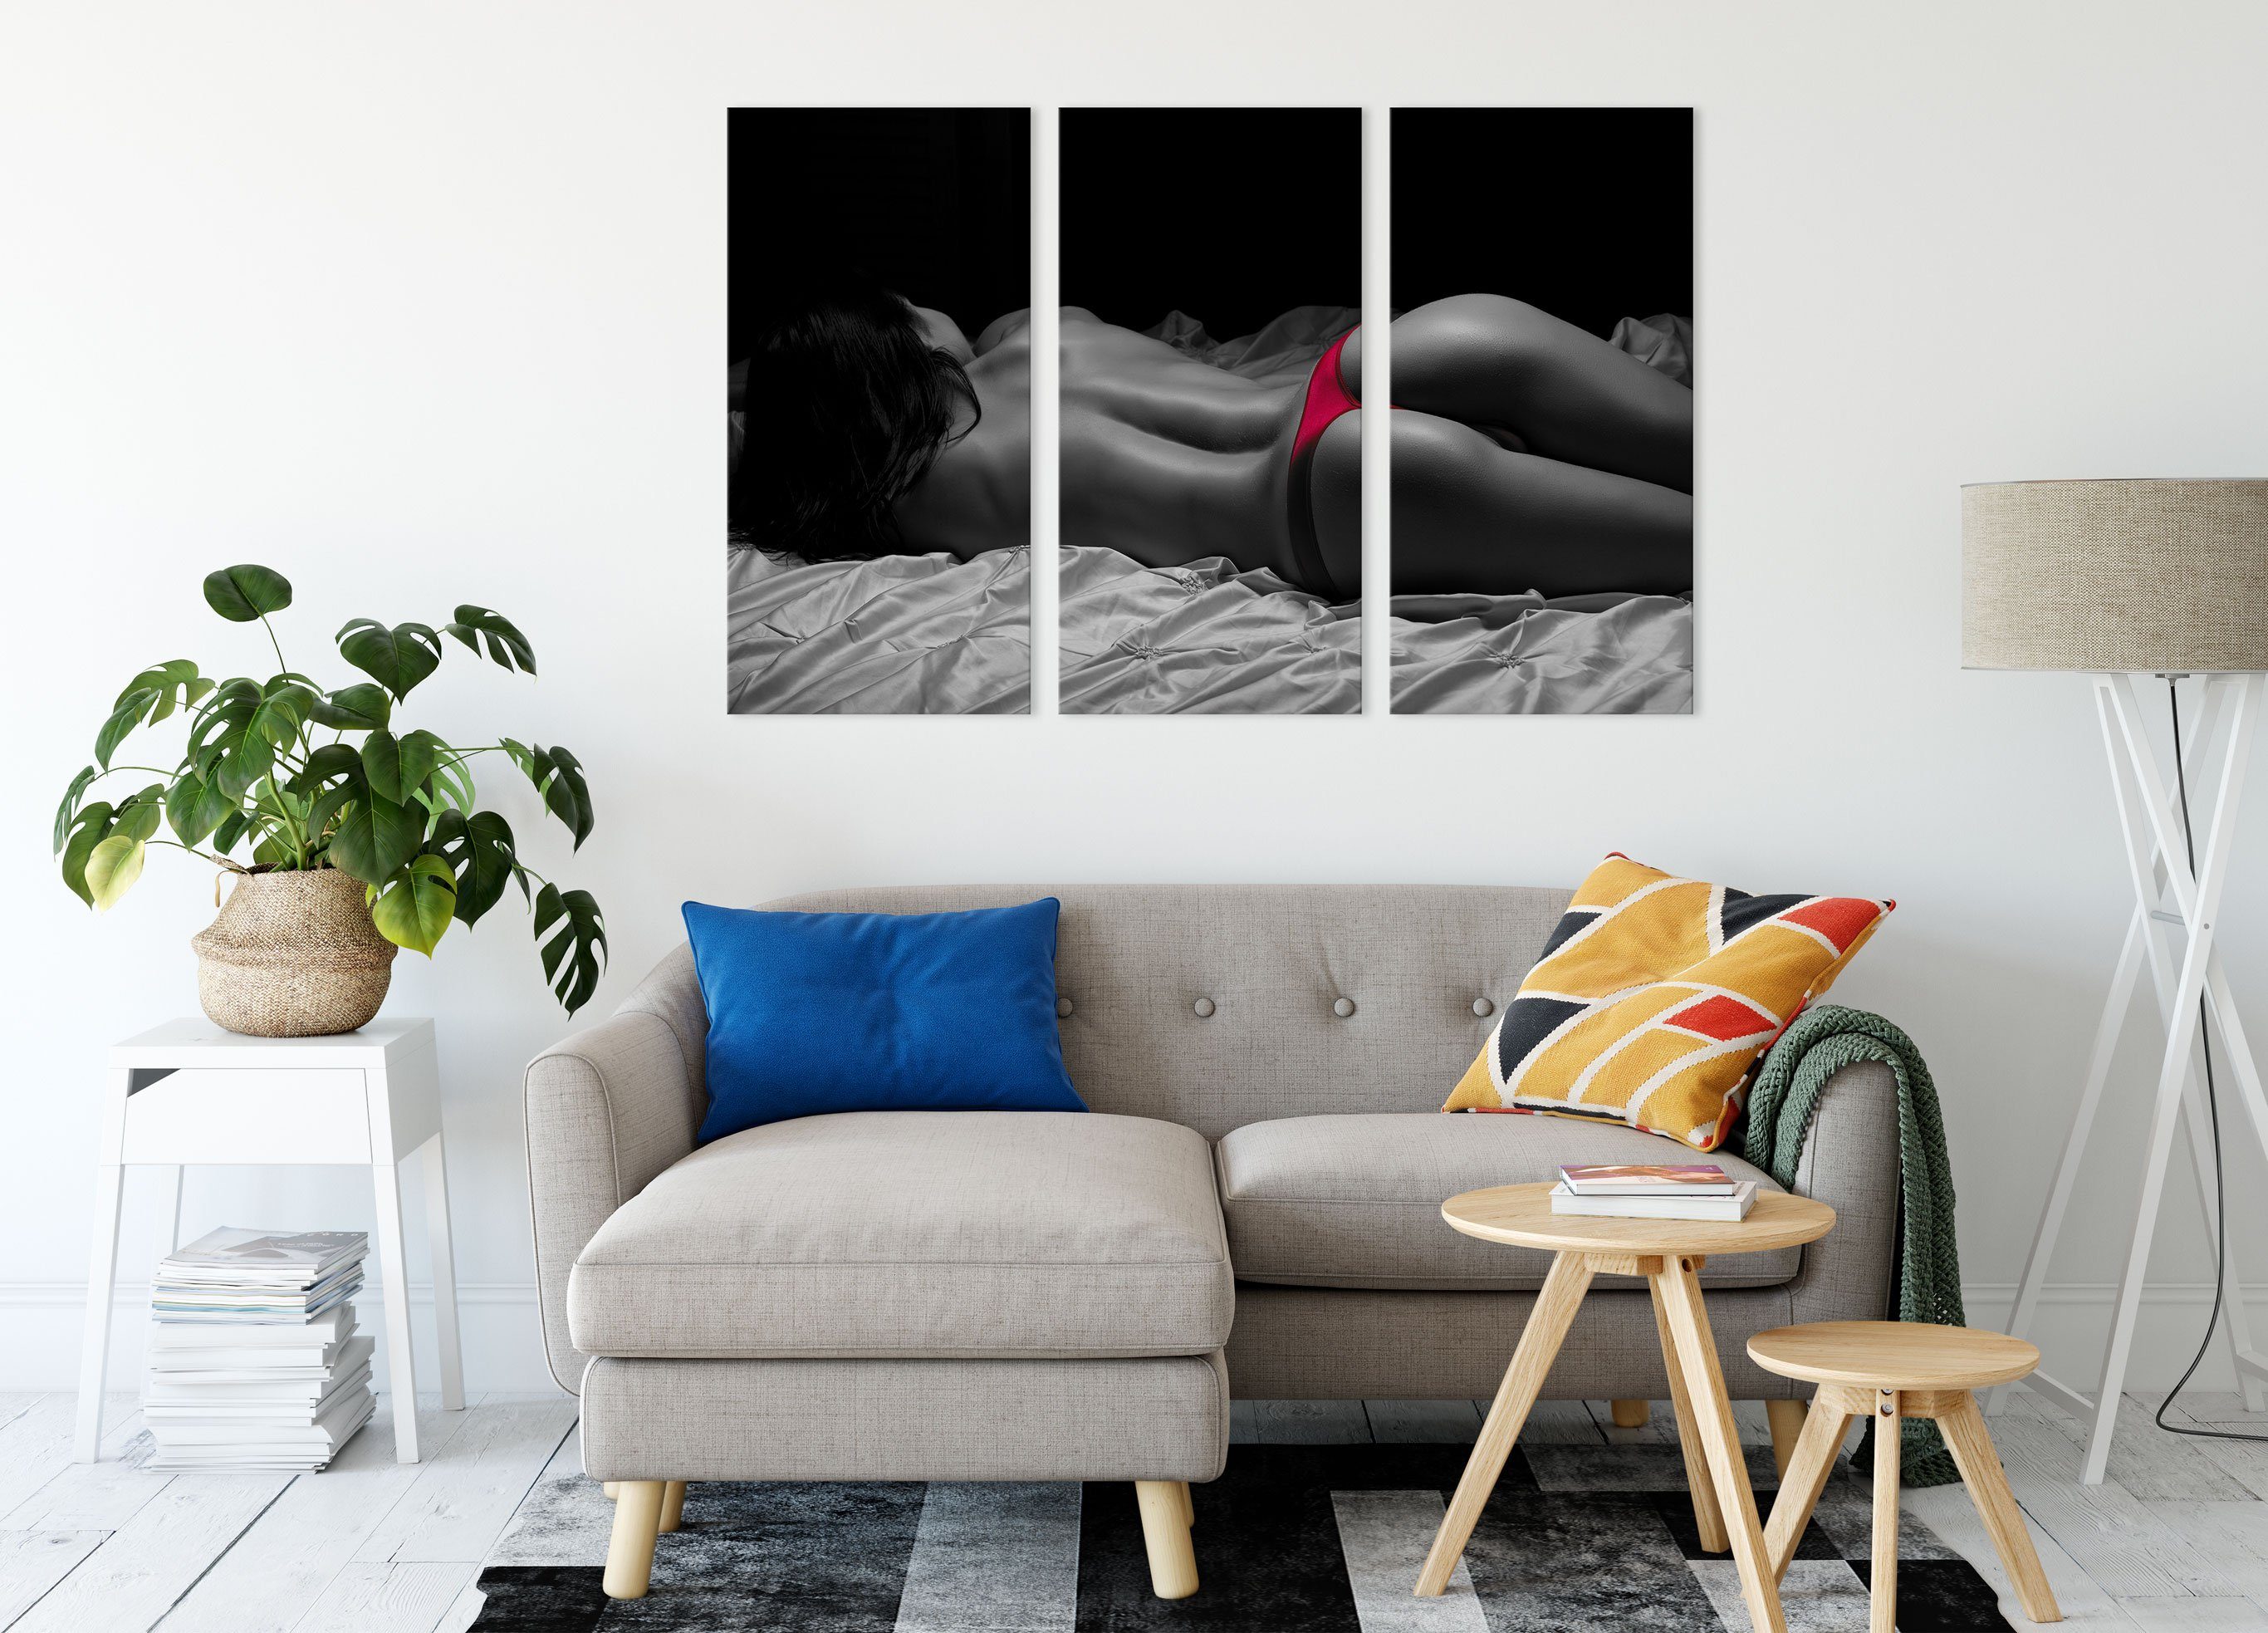 Pixxprint Leinwandbild Perfekter Frauen fertig (120x80cm) Leinwandbild Po Frauen 3Teiler bespannt, Perfekter St), Zackenaufhänger (1 Po, inkl